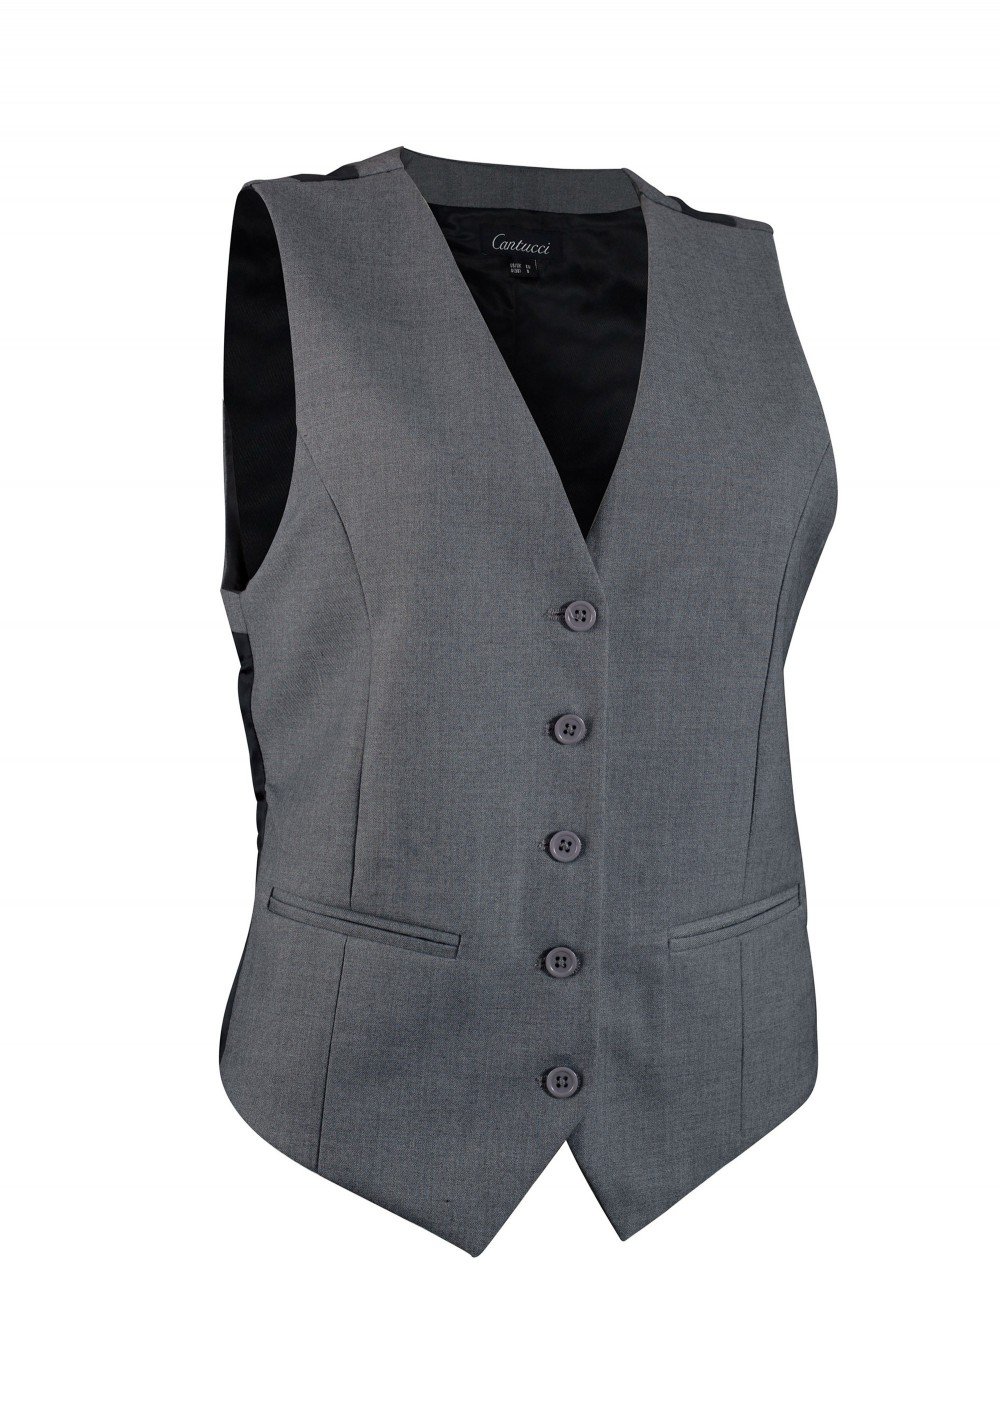 Womens Vests | Womens Suit Vest in Medium Gray | Uniform Vests for Women |  Bows-N-Ties.com